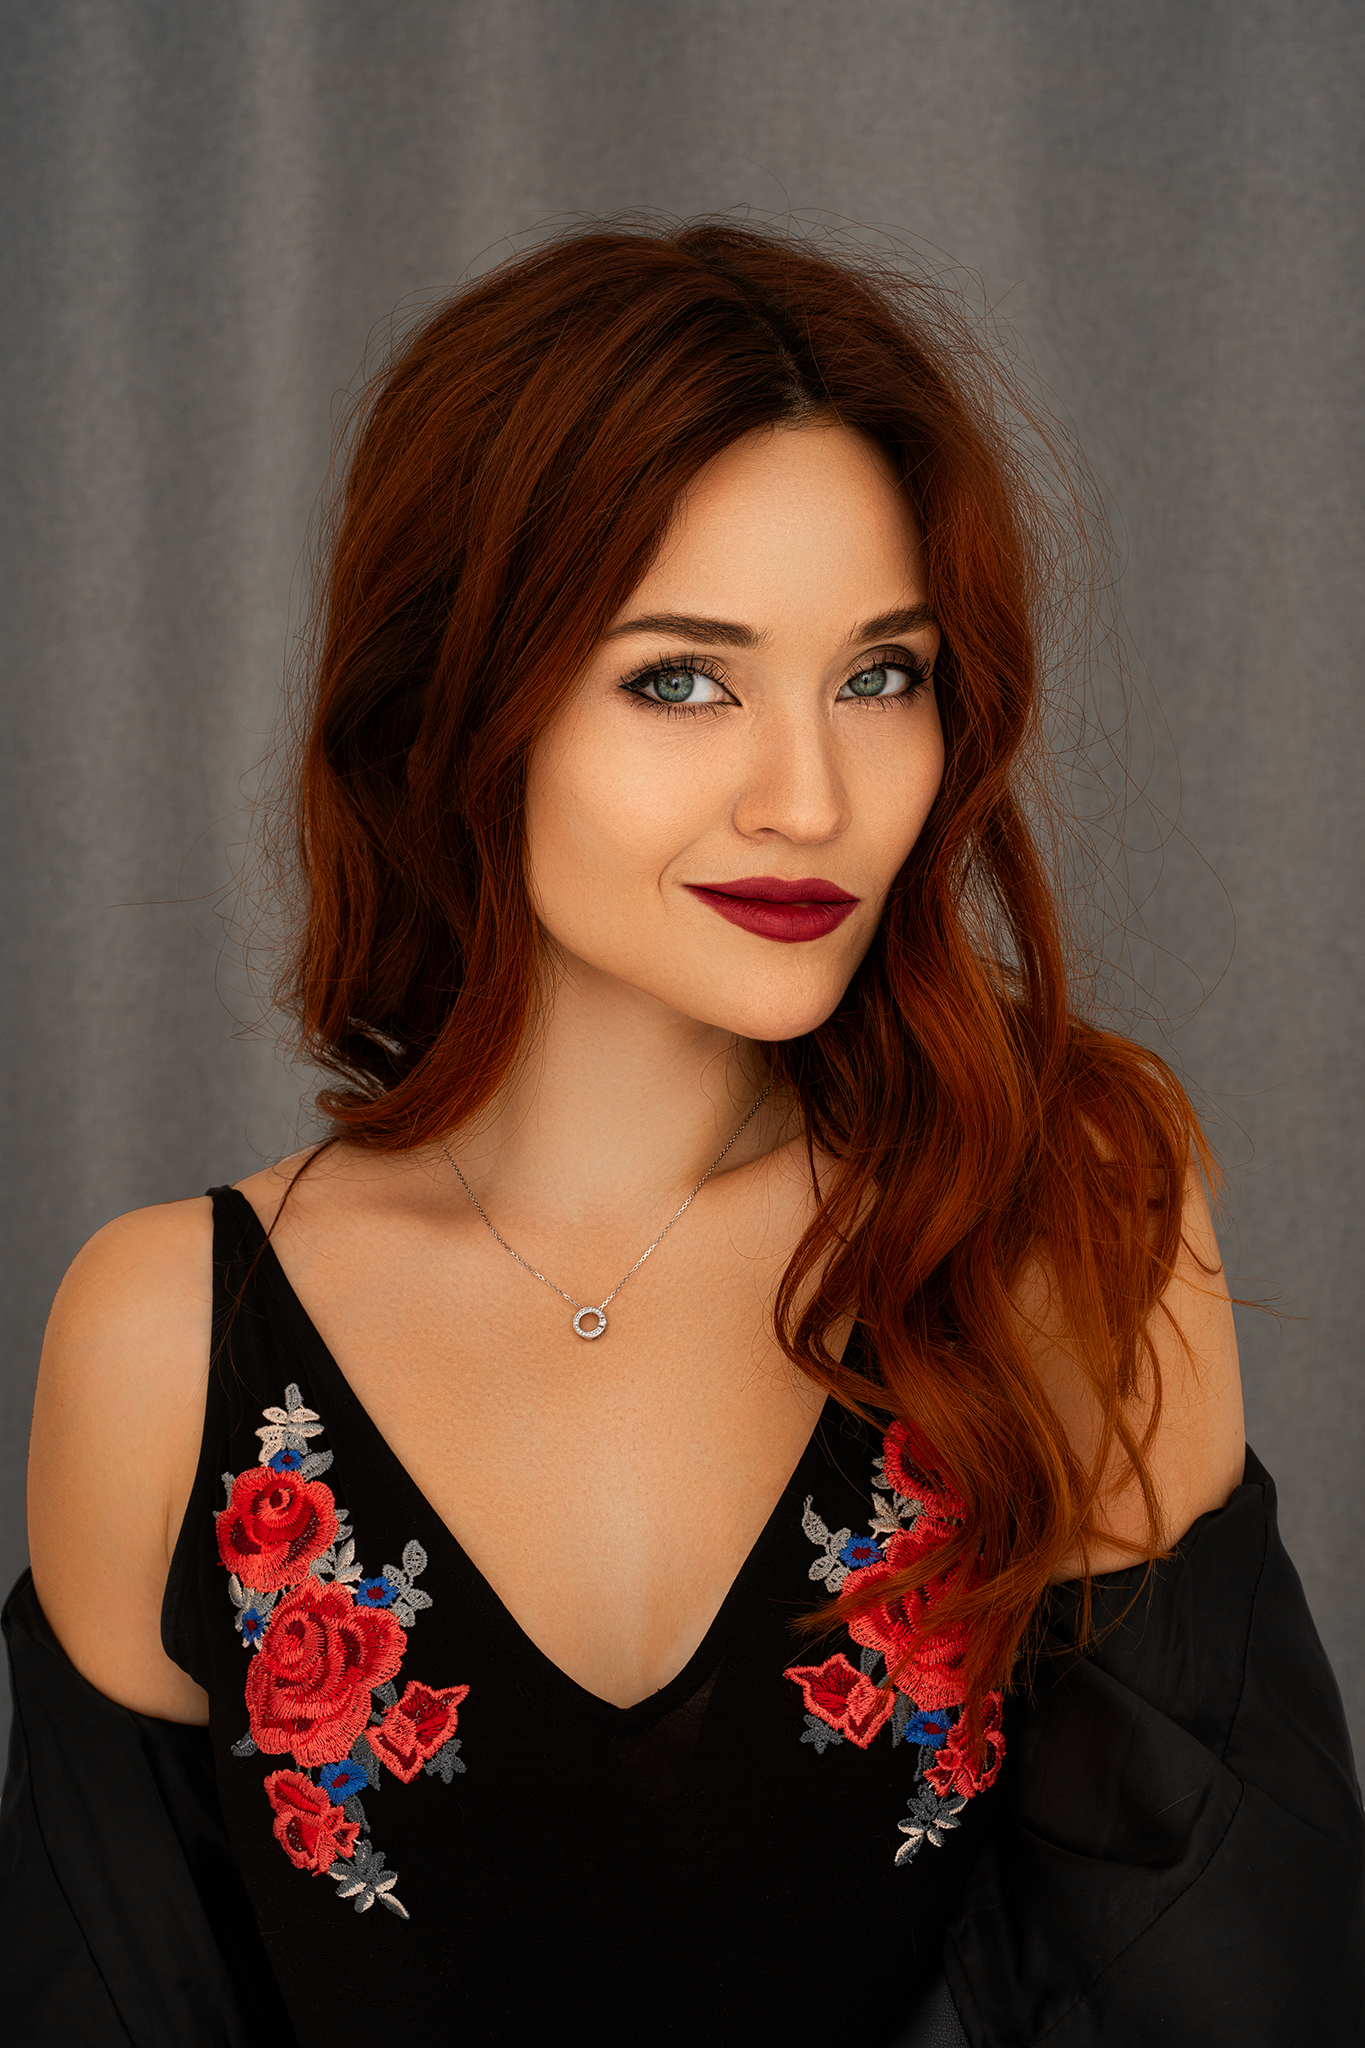 Dmitry Shulgin Women Redhead Smiling Lipstick Flowers 1365x2048